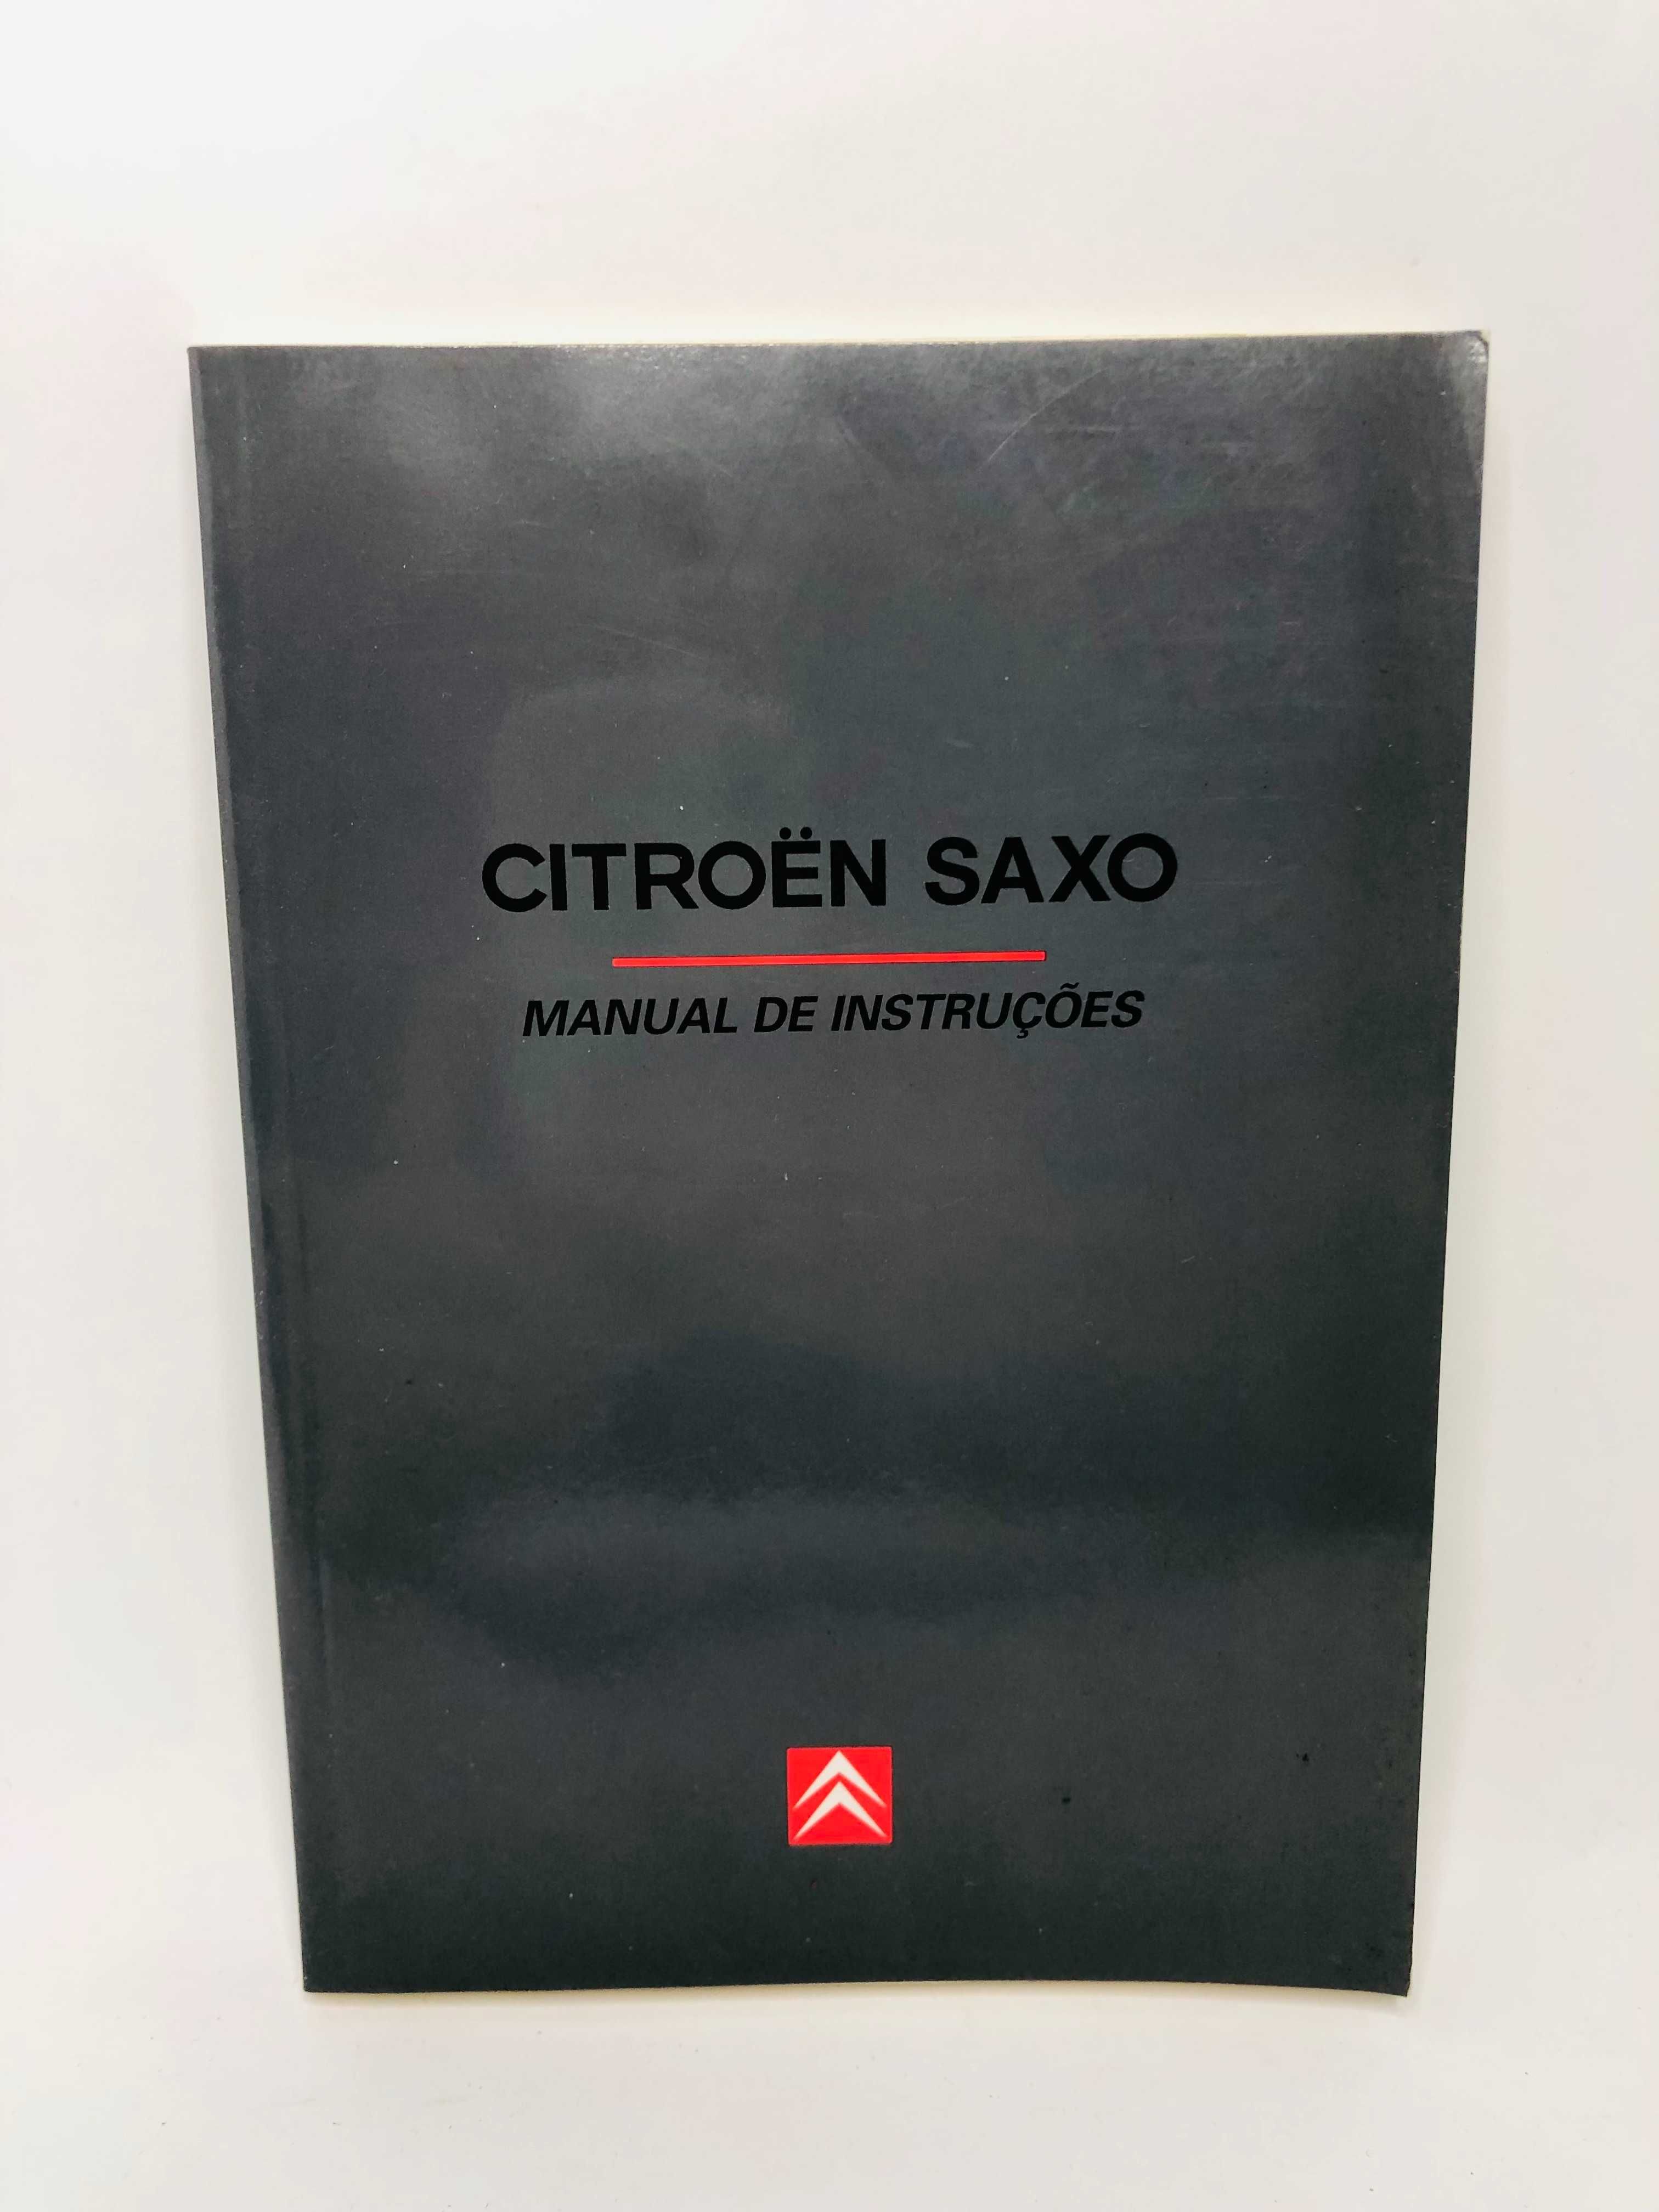 Manual de Instruções - Citroen Saxo